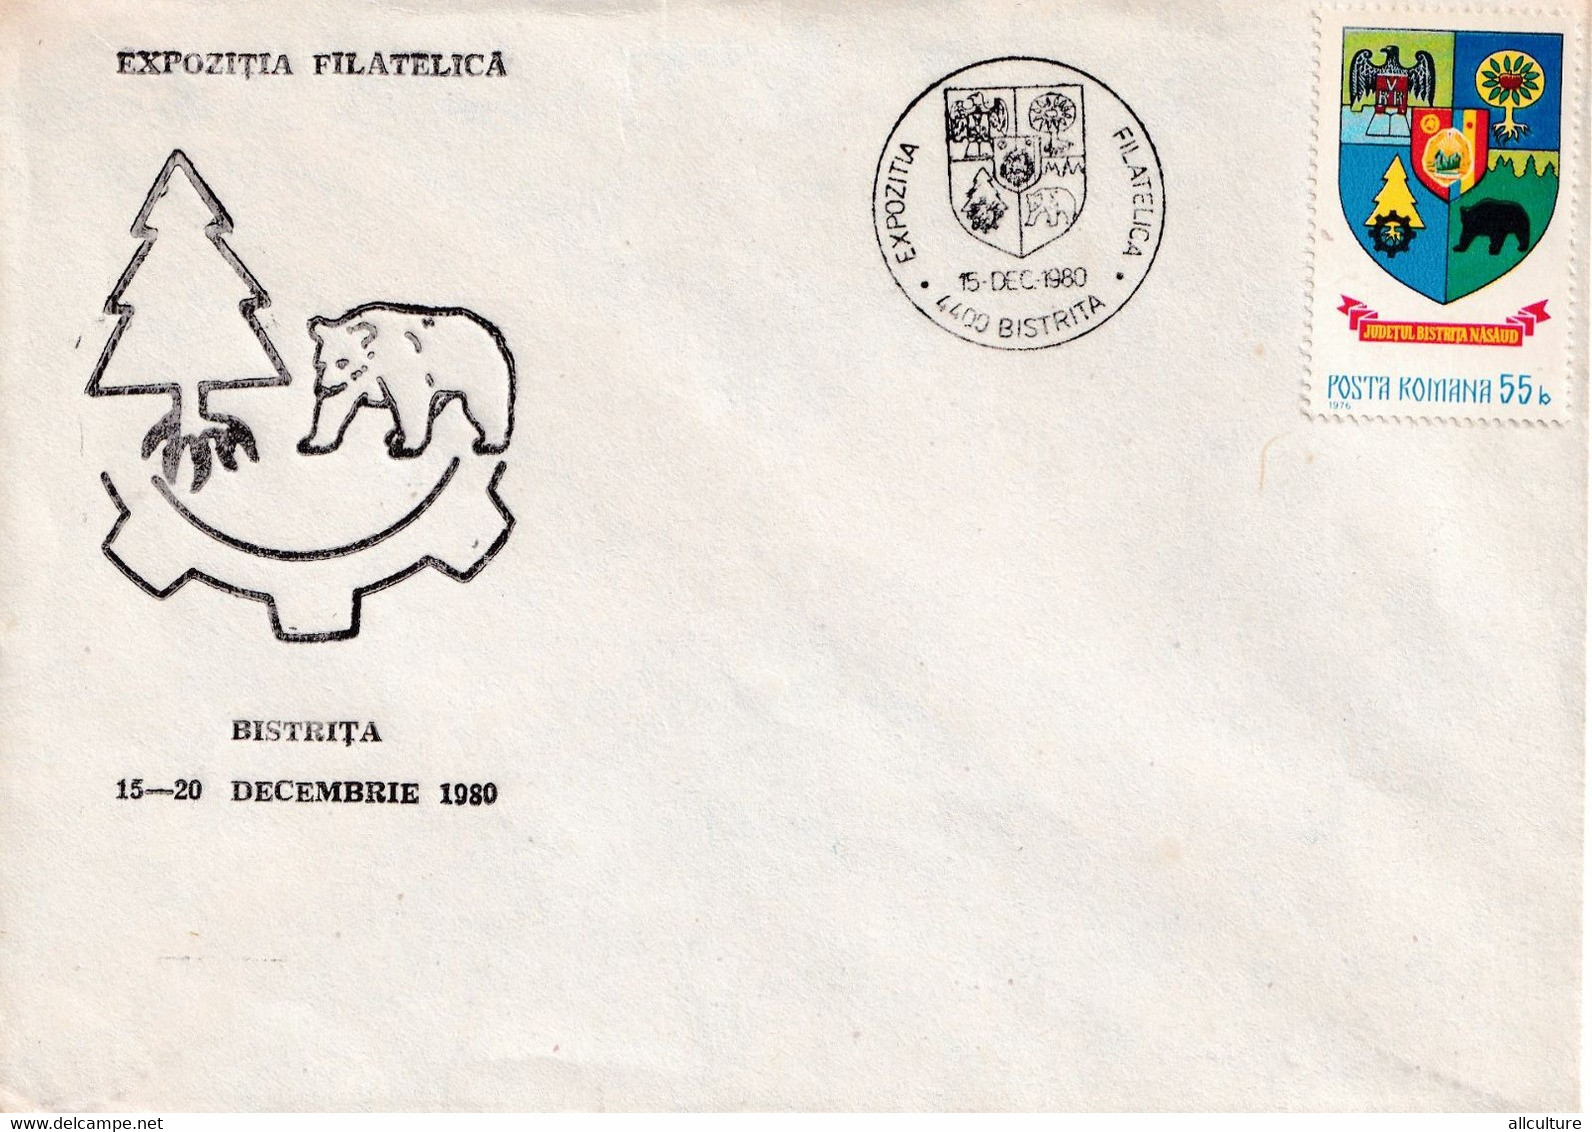 A2804 -  Expozitia Filatelica15-20 Decembrie 1980  Bistrita, Bistrita Nasaud 1980 Romania - Covers & Documents